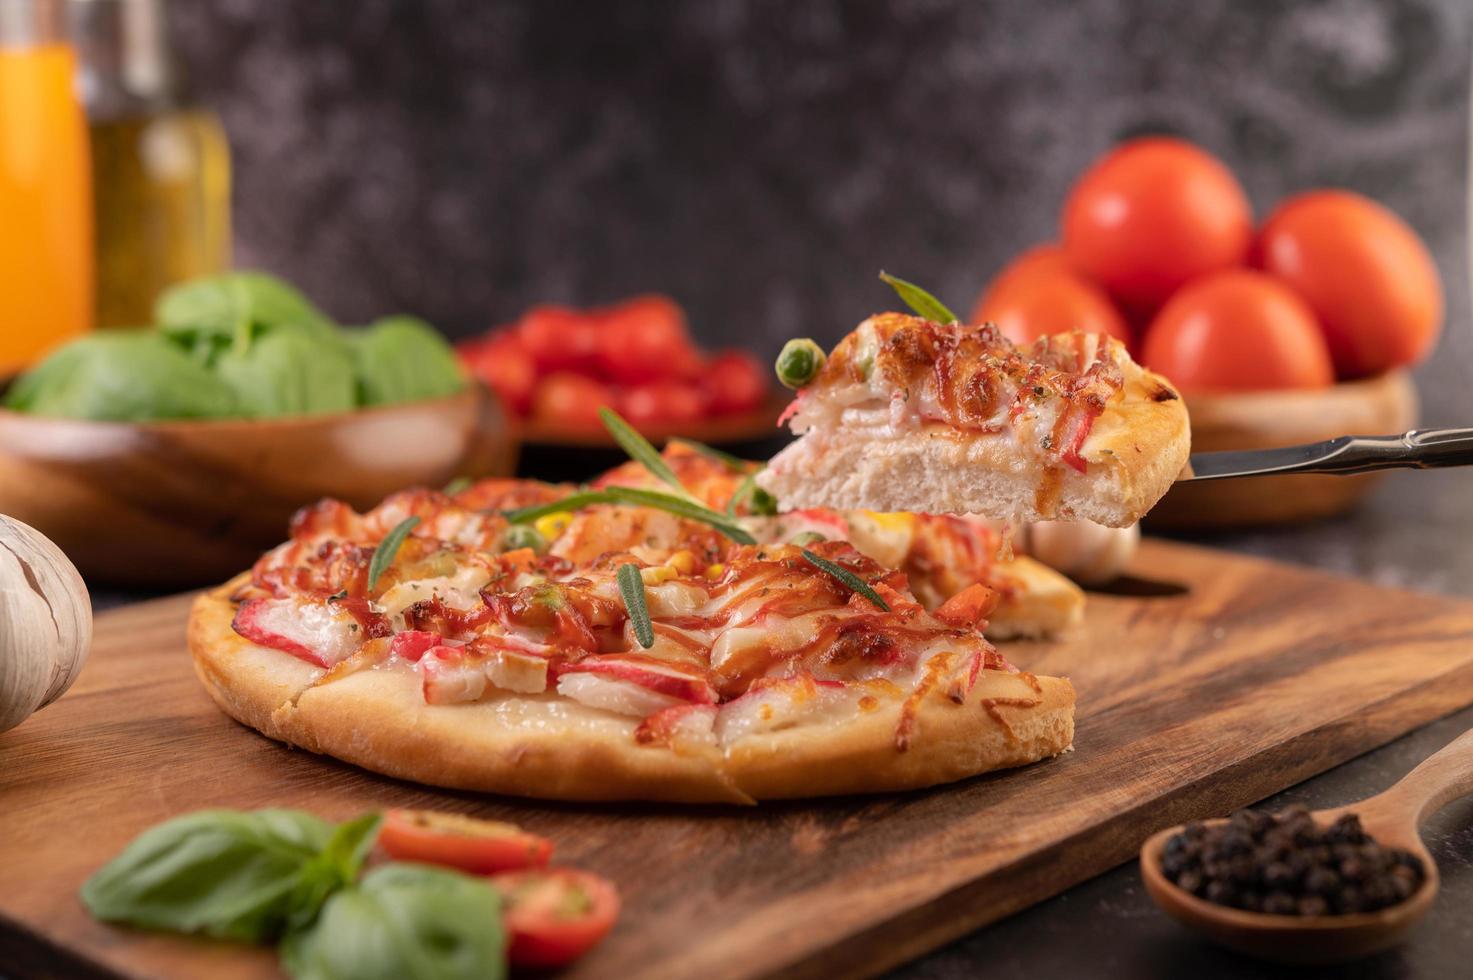 pizza casera con ingredientes foto